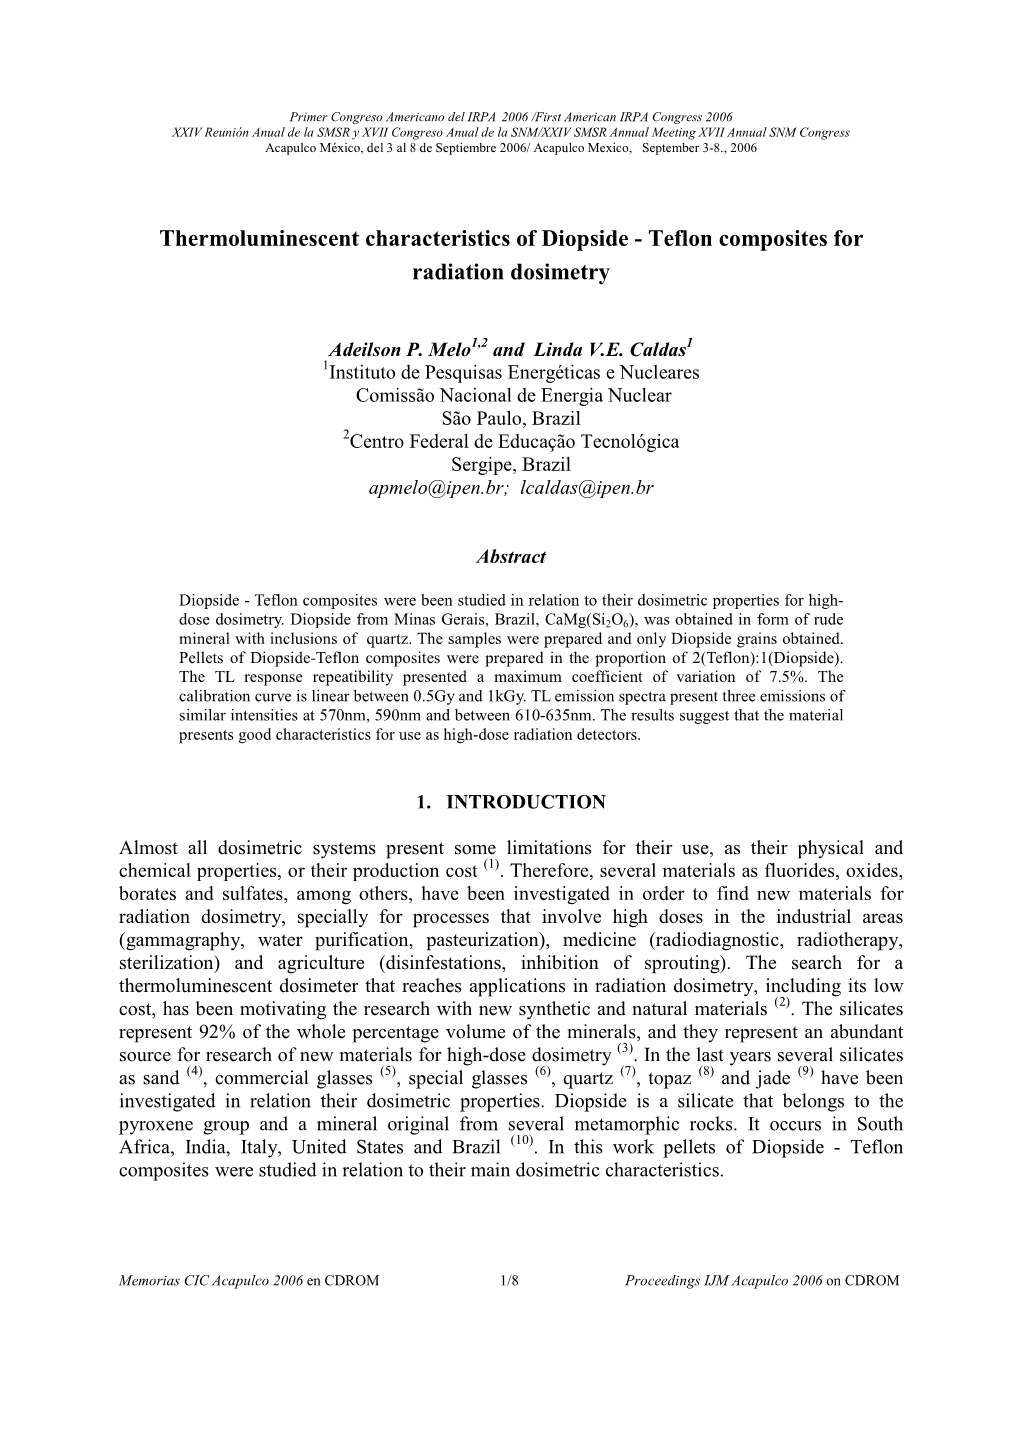 Thermoluminescent Characteristics of Diopside - Teflon Composites for Radiation Dosimetry